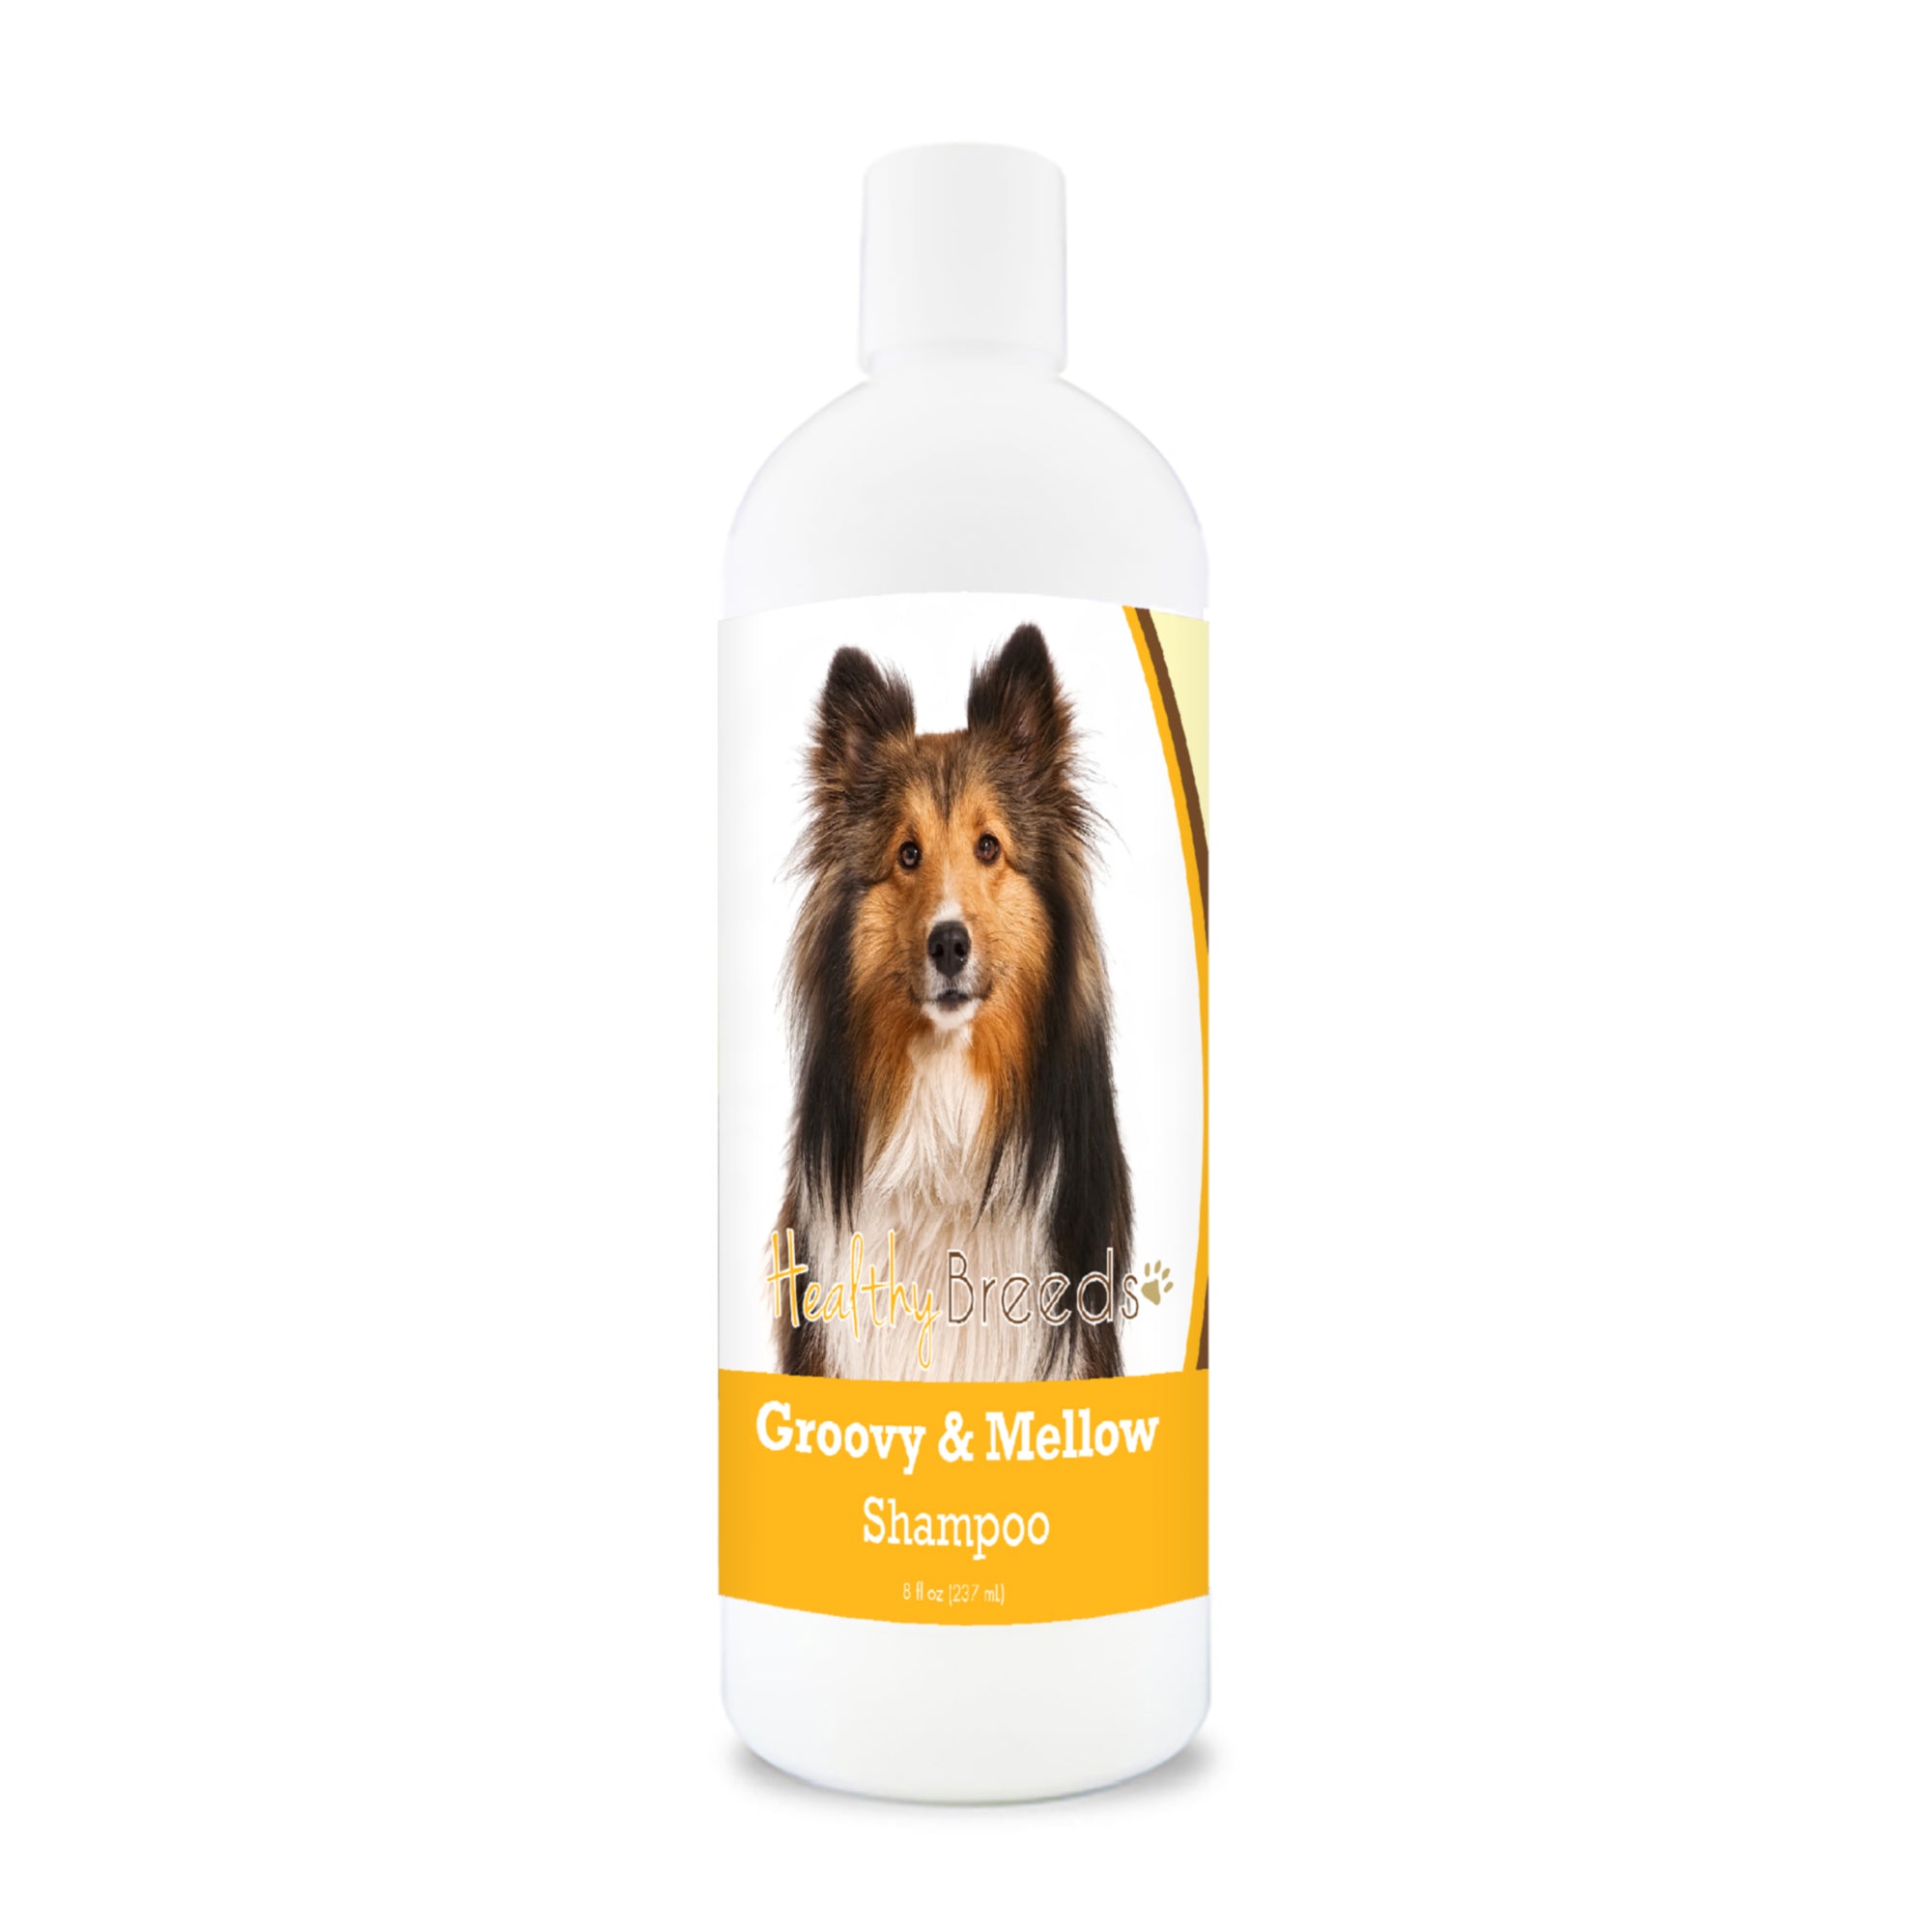 Shetland Sheepdog Groovy & Mellow Shampoo 8 oz